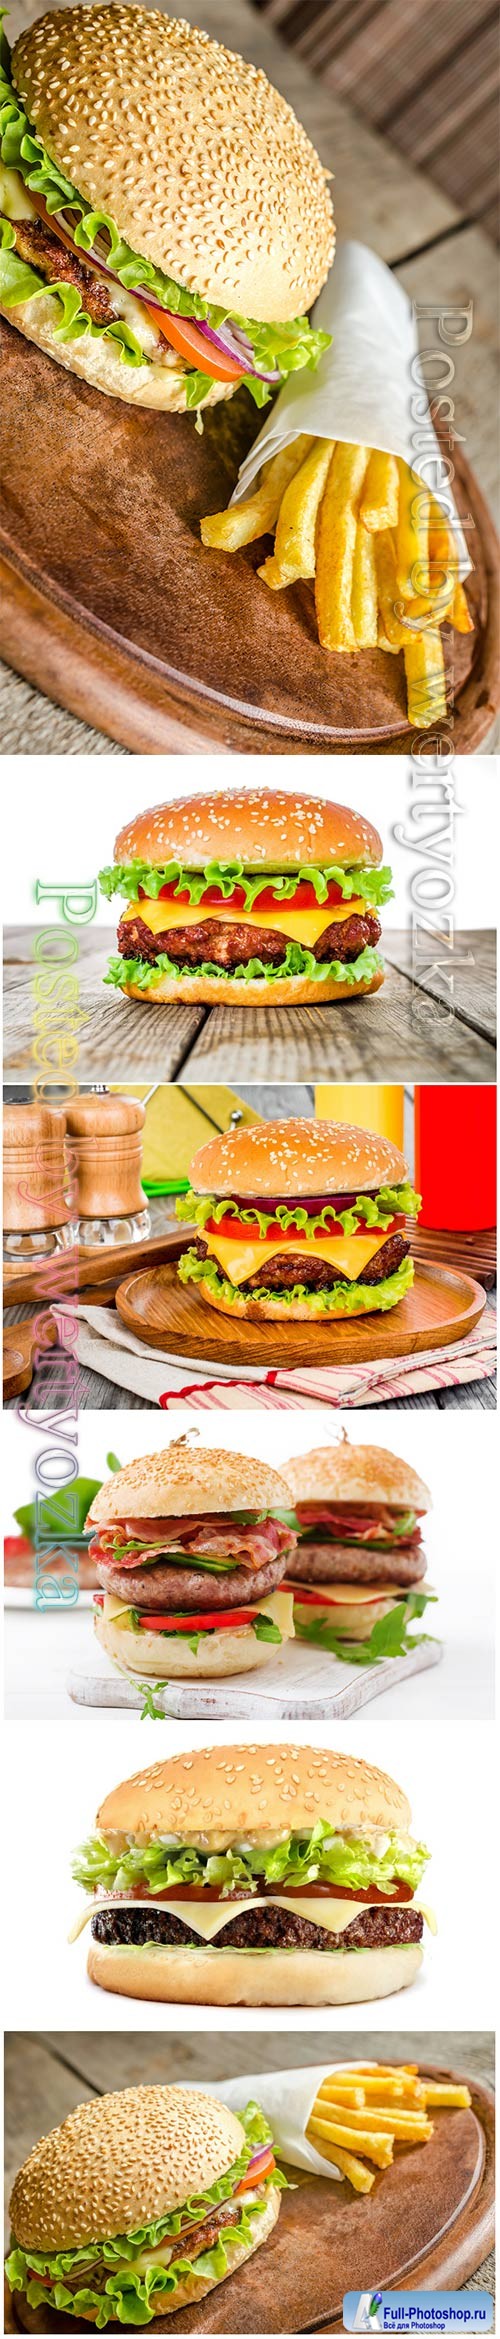 Cheeseburger, hamburger beautiful stock photo